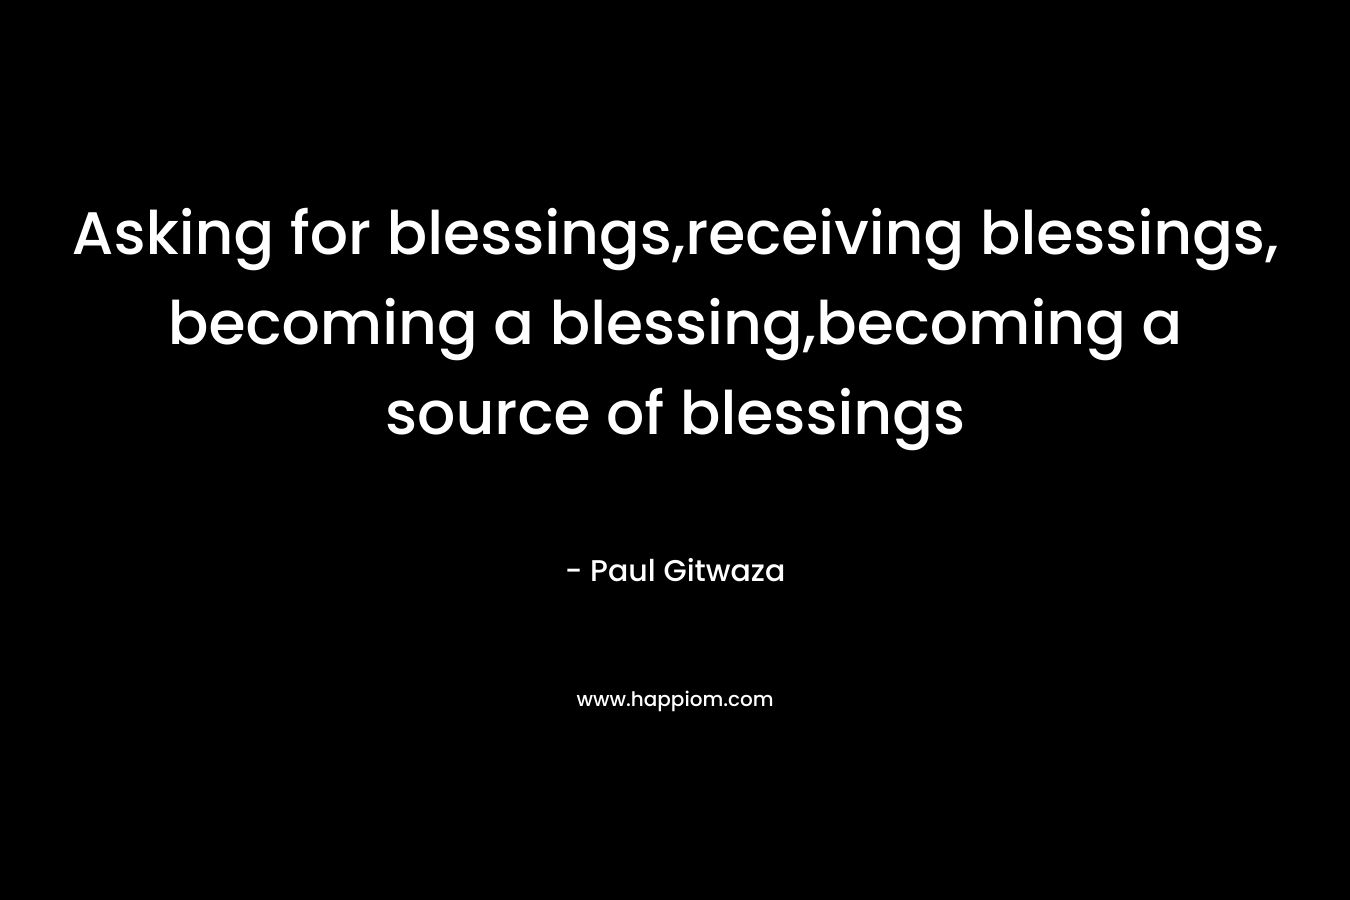 Asking for blessings,receiving blessings, becoming a blessing,becoming a source of blessings